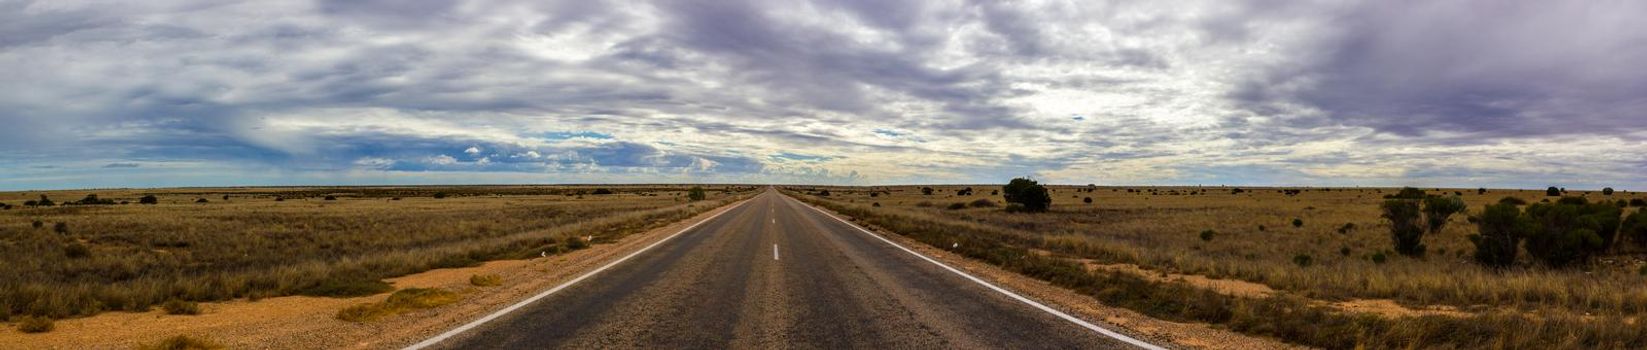 panorama of a straight road through the nullarbor dessert of Australia, South Australia, Australia